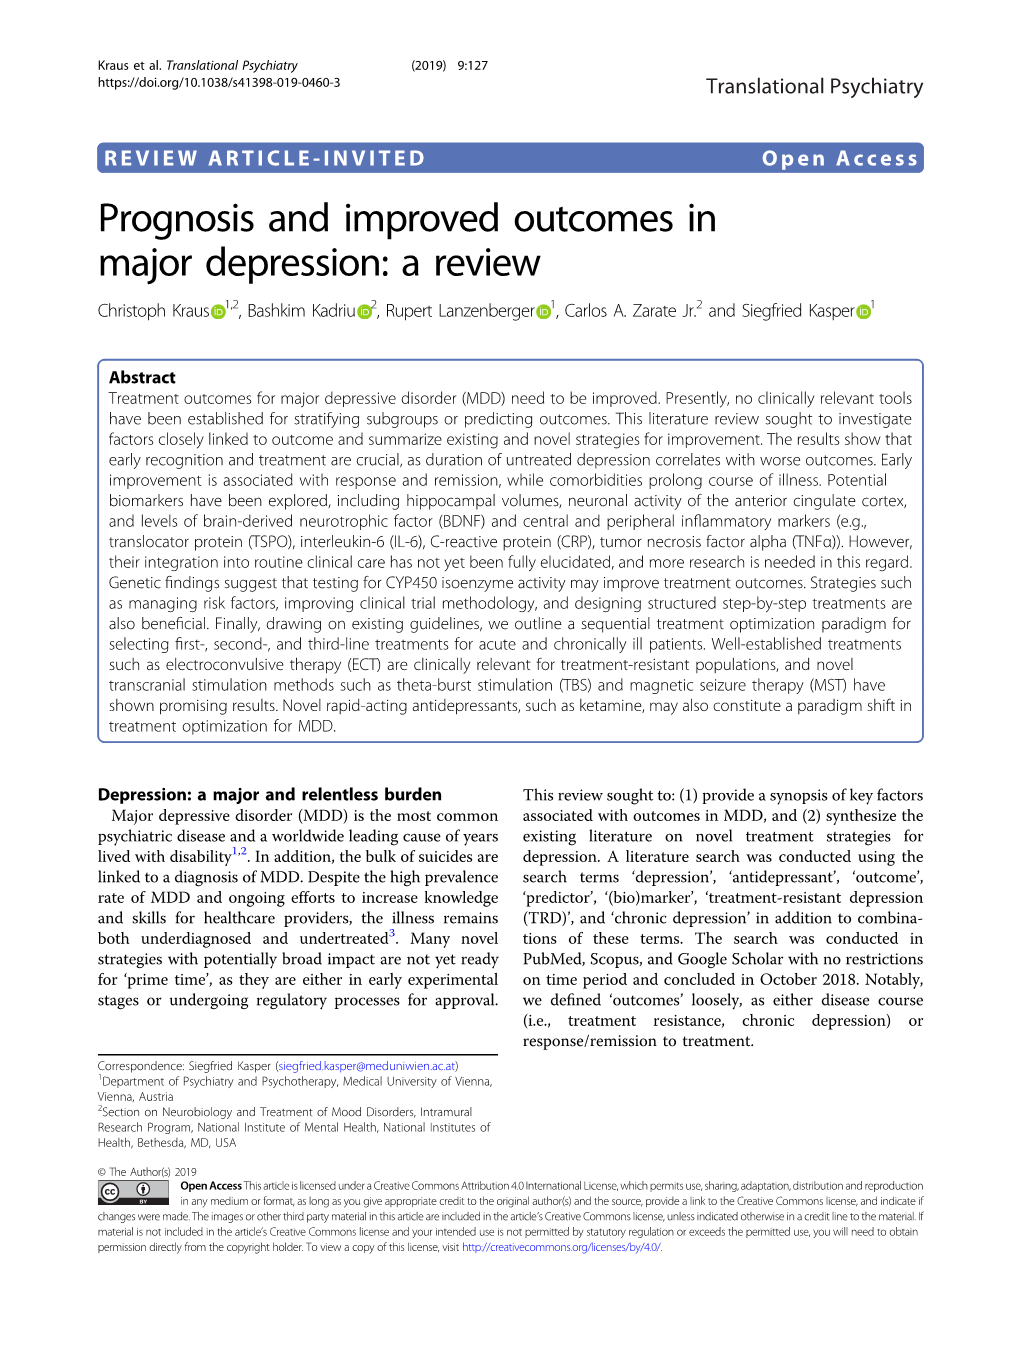 Prognosis and Improved Outcomes in Major Depression: a Review Christoph Kraus 1,2, Bashkim Kadriu 2, Rupert Lanzenberger 1, Carlos A